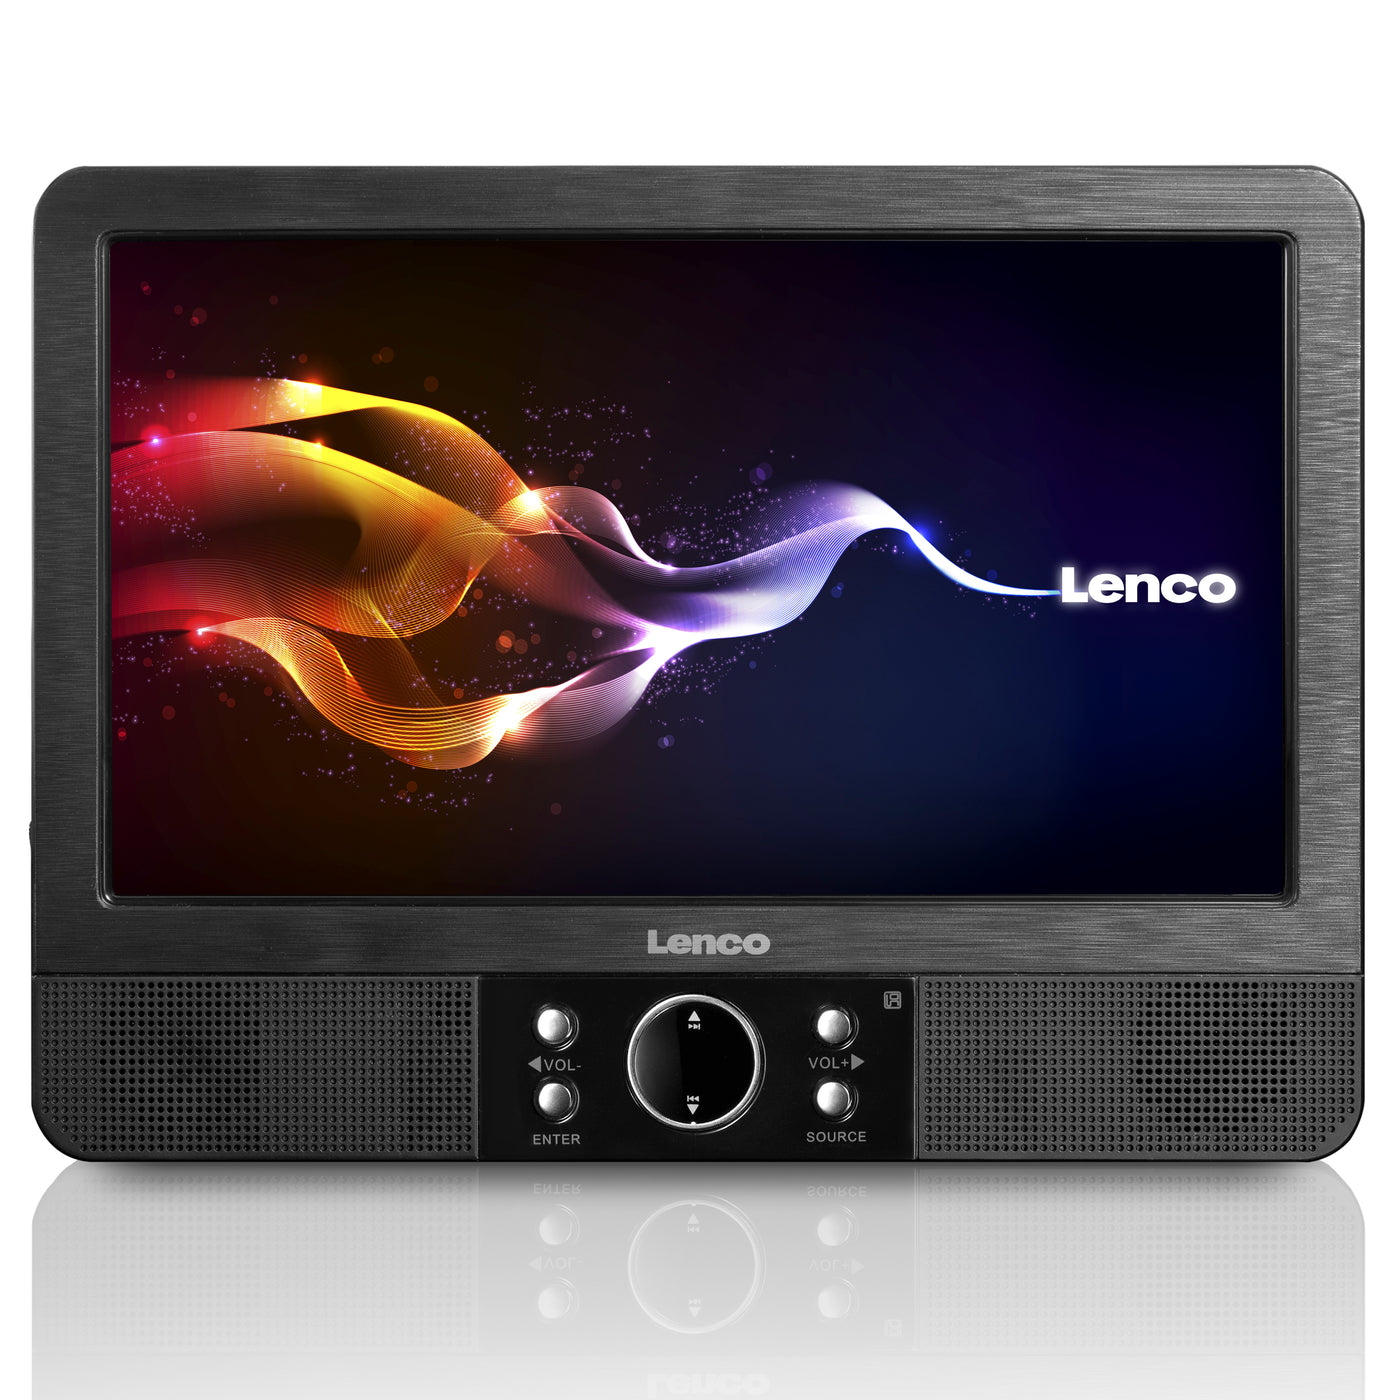 Lenco MES-415 - 9 Zoll Tragbarer DVD-Player mit Doppel-Bildschirm - USB/SD - Schwarz